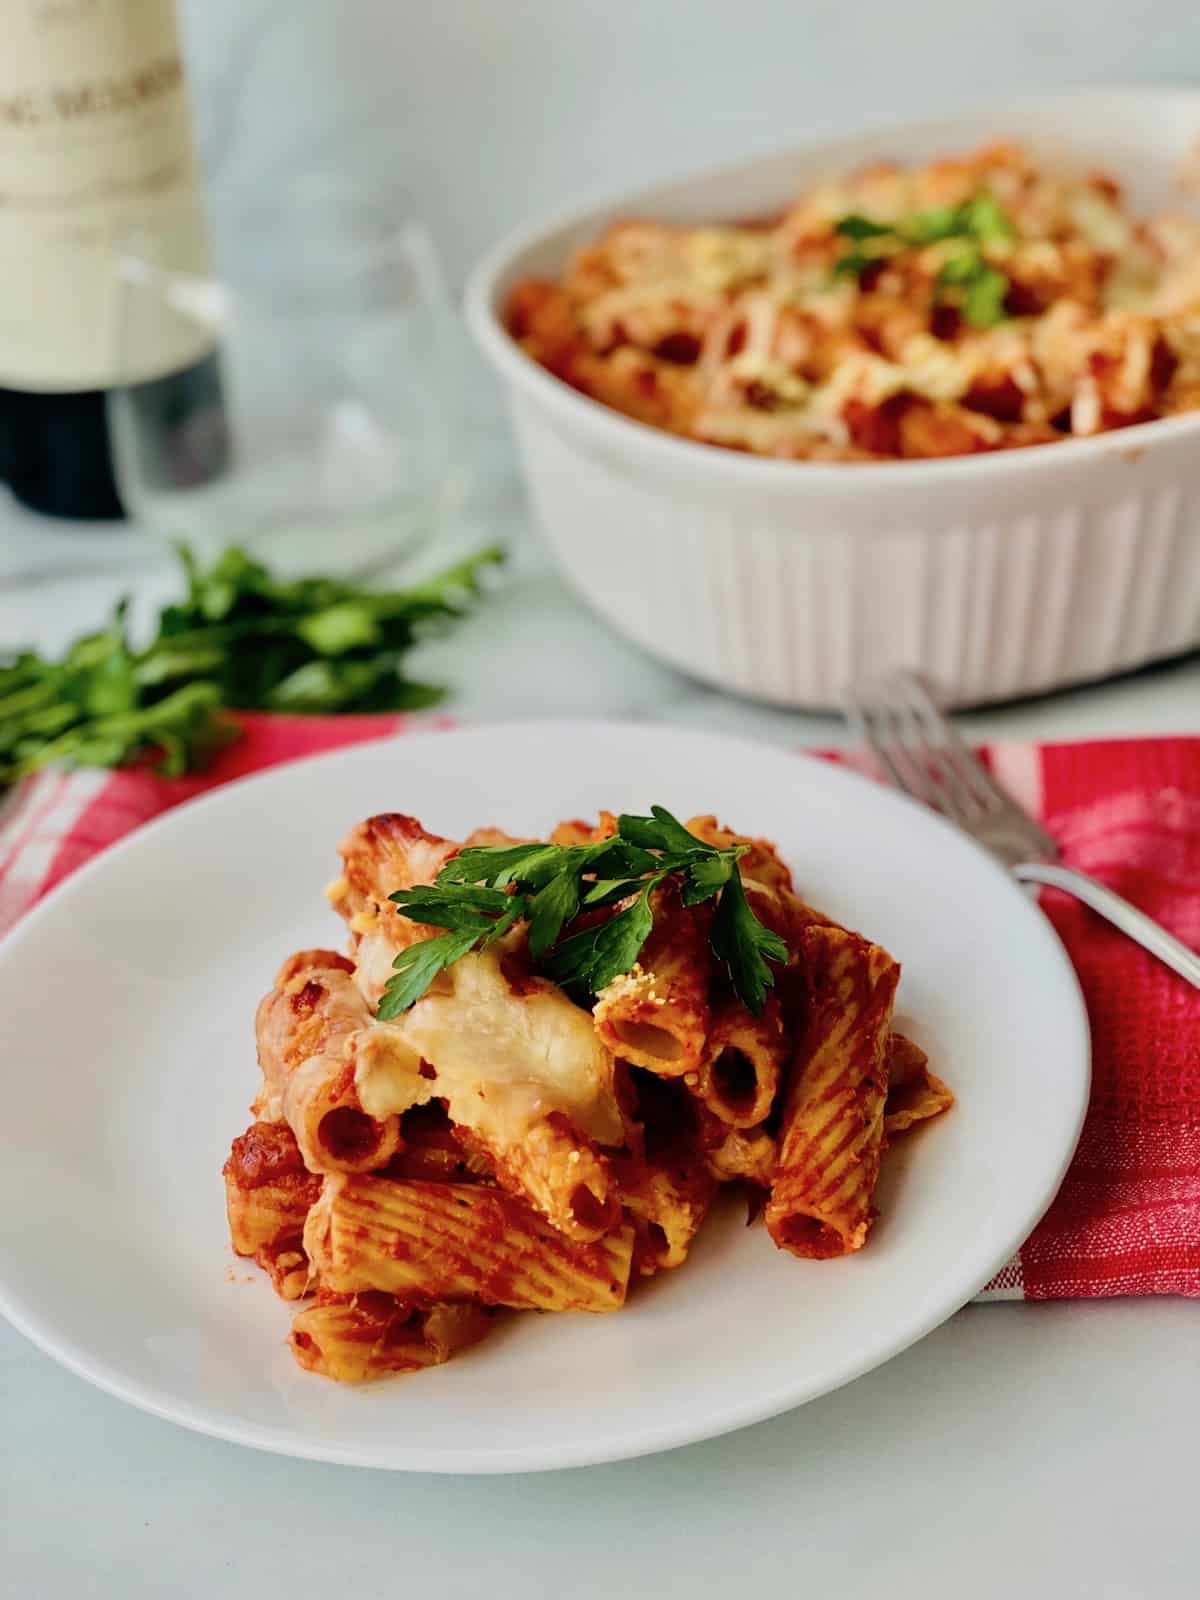 plated pasta al forno casserole dish plus wine on the table